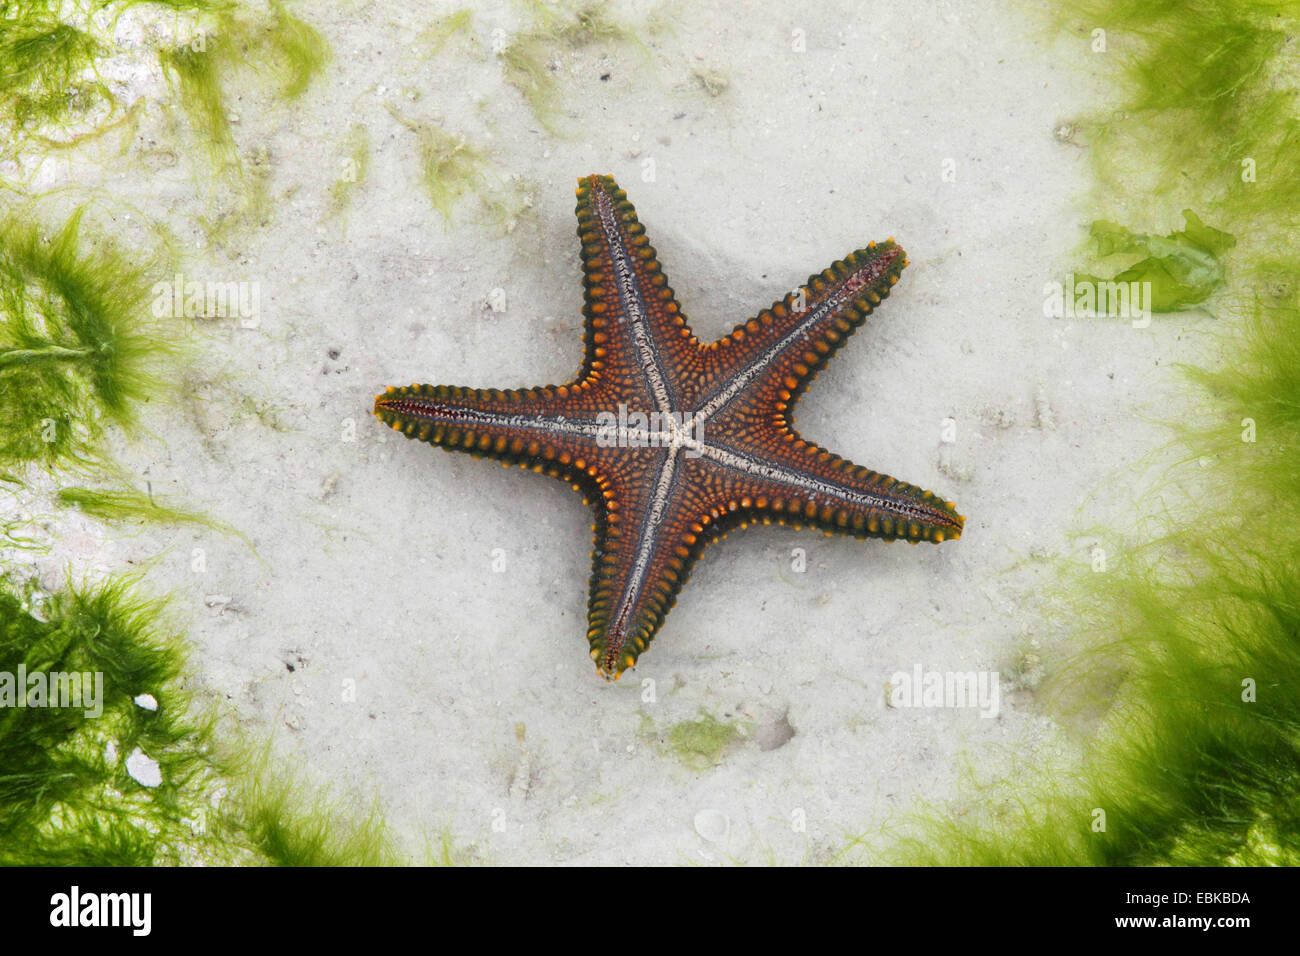 Panamic Cushion Sea Star (Pentaceraster cumingi), sea star on a beach, Tanzania, Sansibar Stock Photo